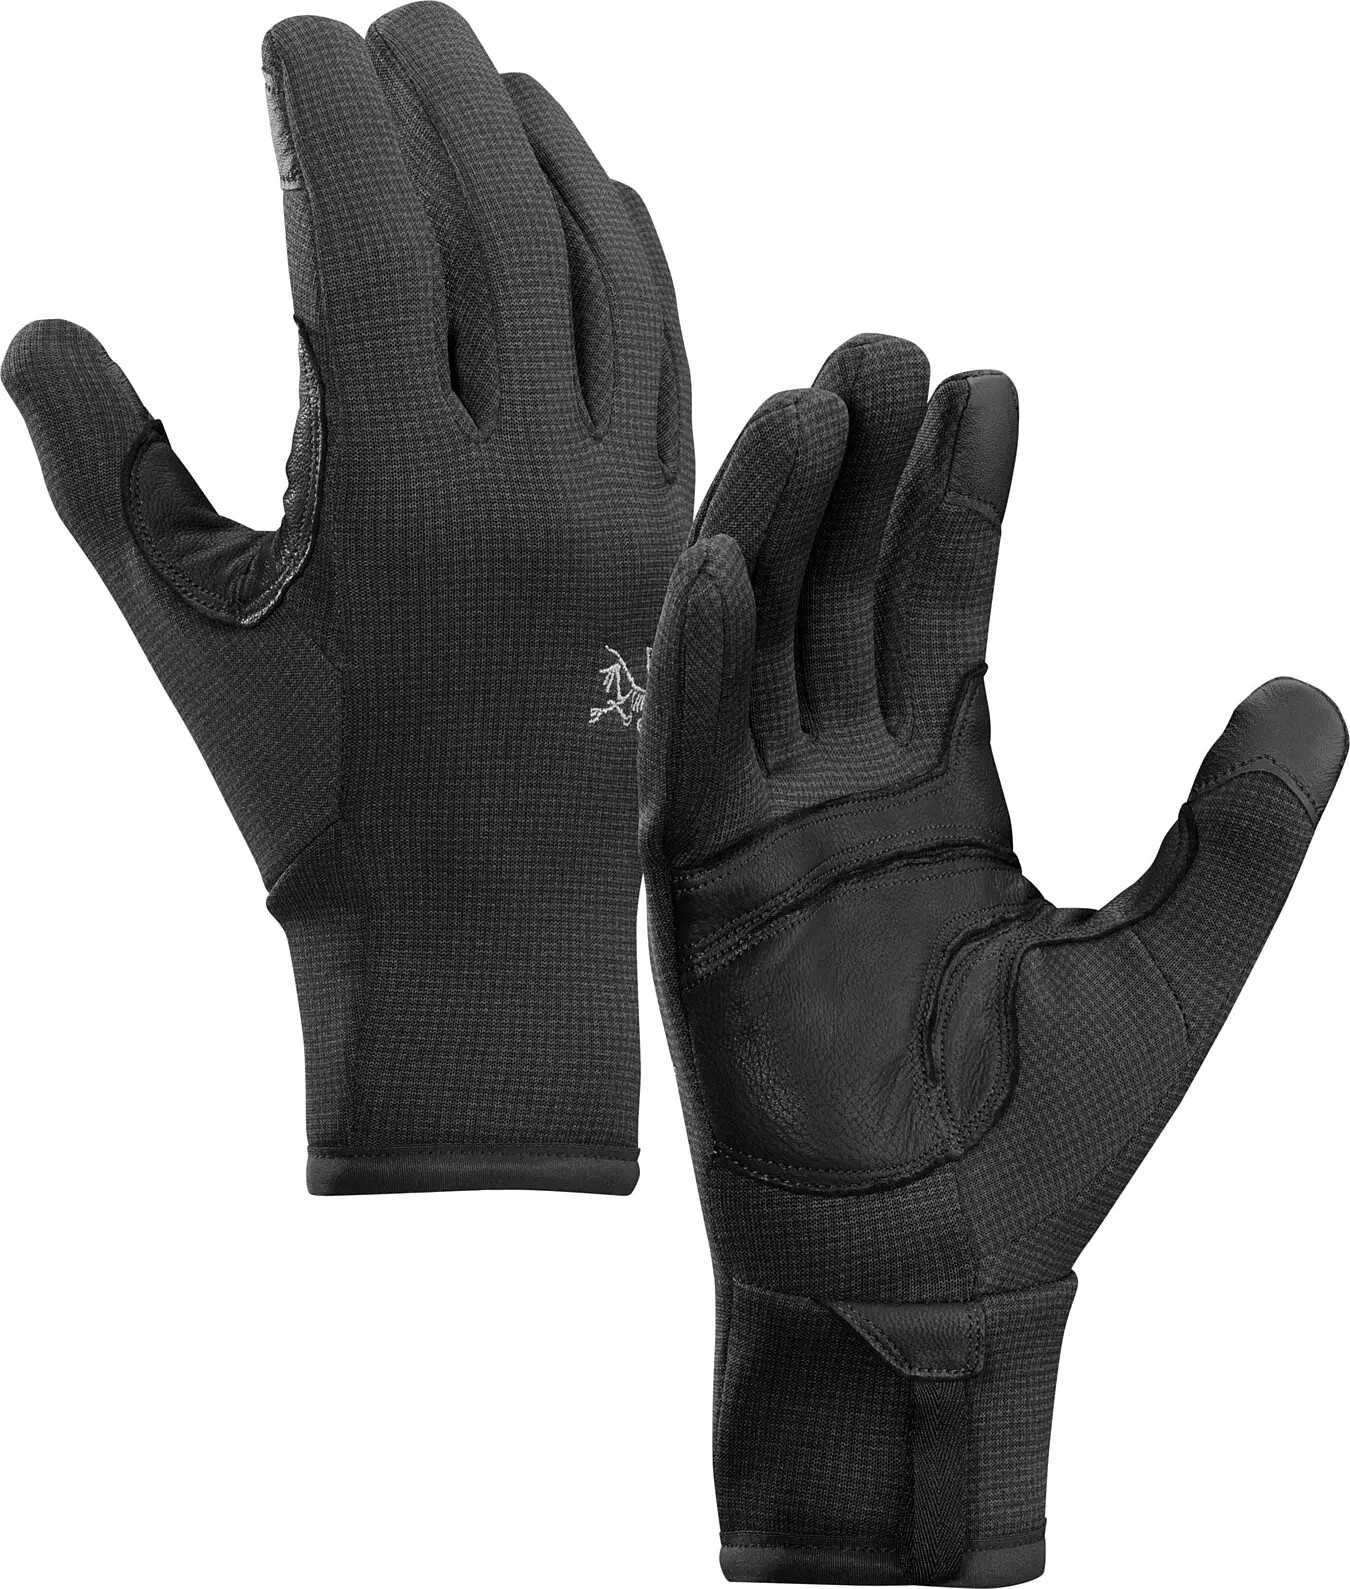 Arcteryx Unisex Rivet Glove Black